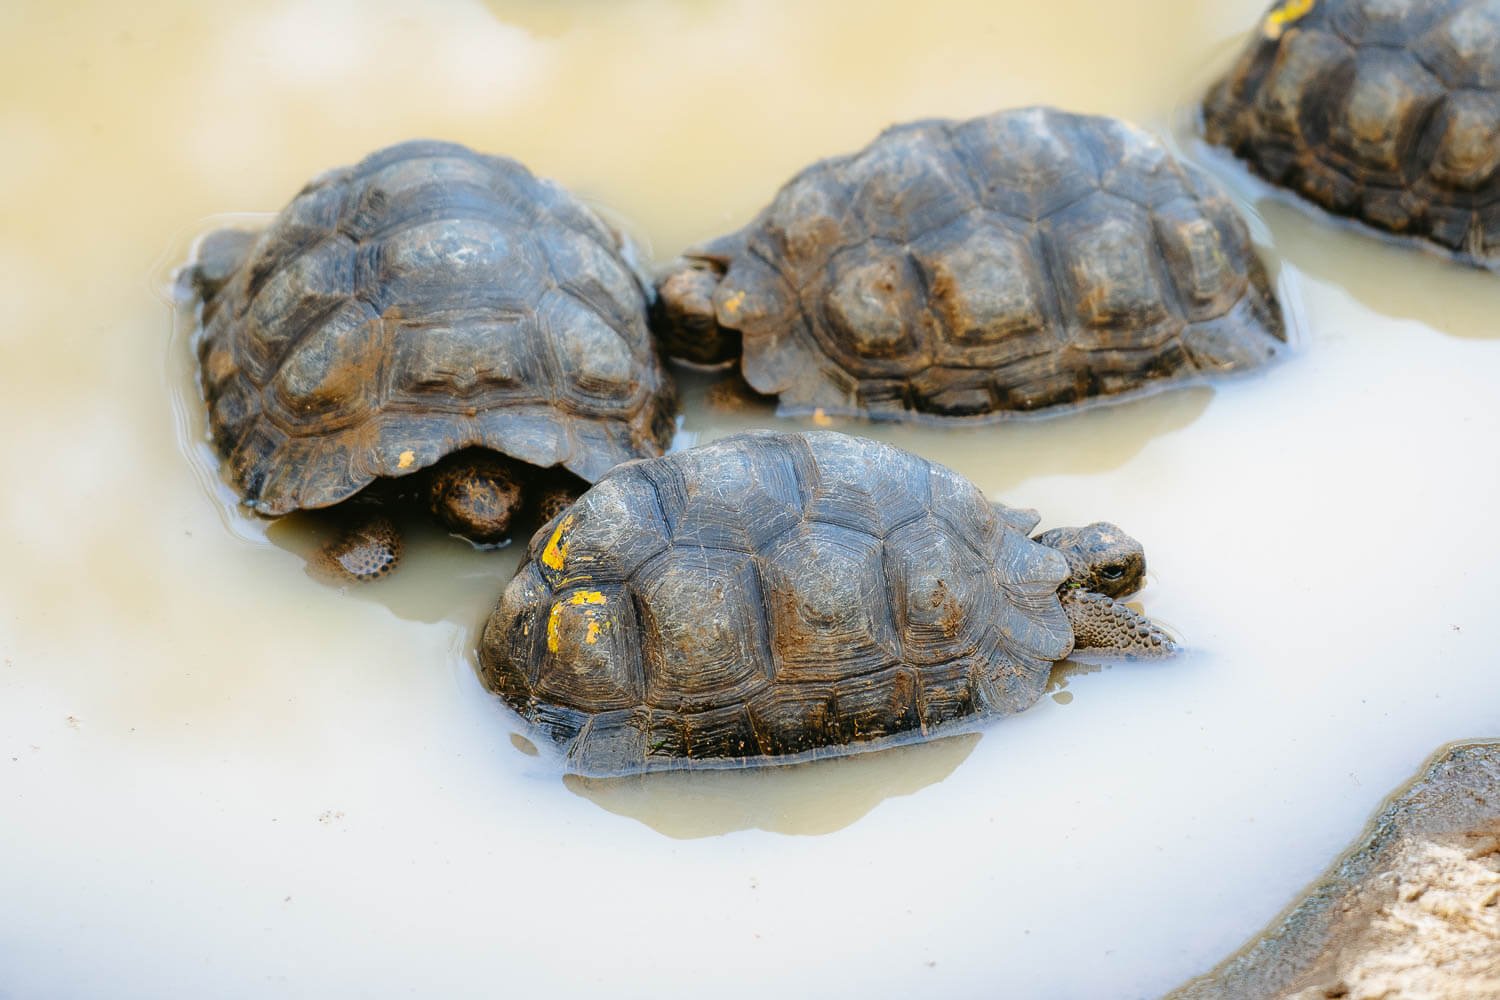 Juvenile tortoises at La Galapaguera on the Highlands Tour in San Cristobal